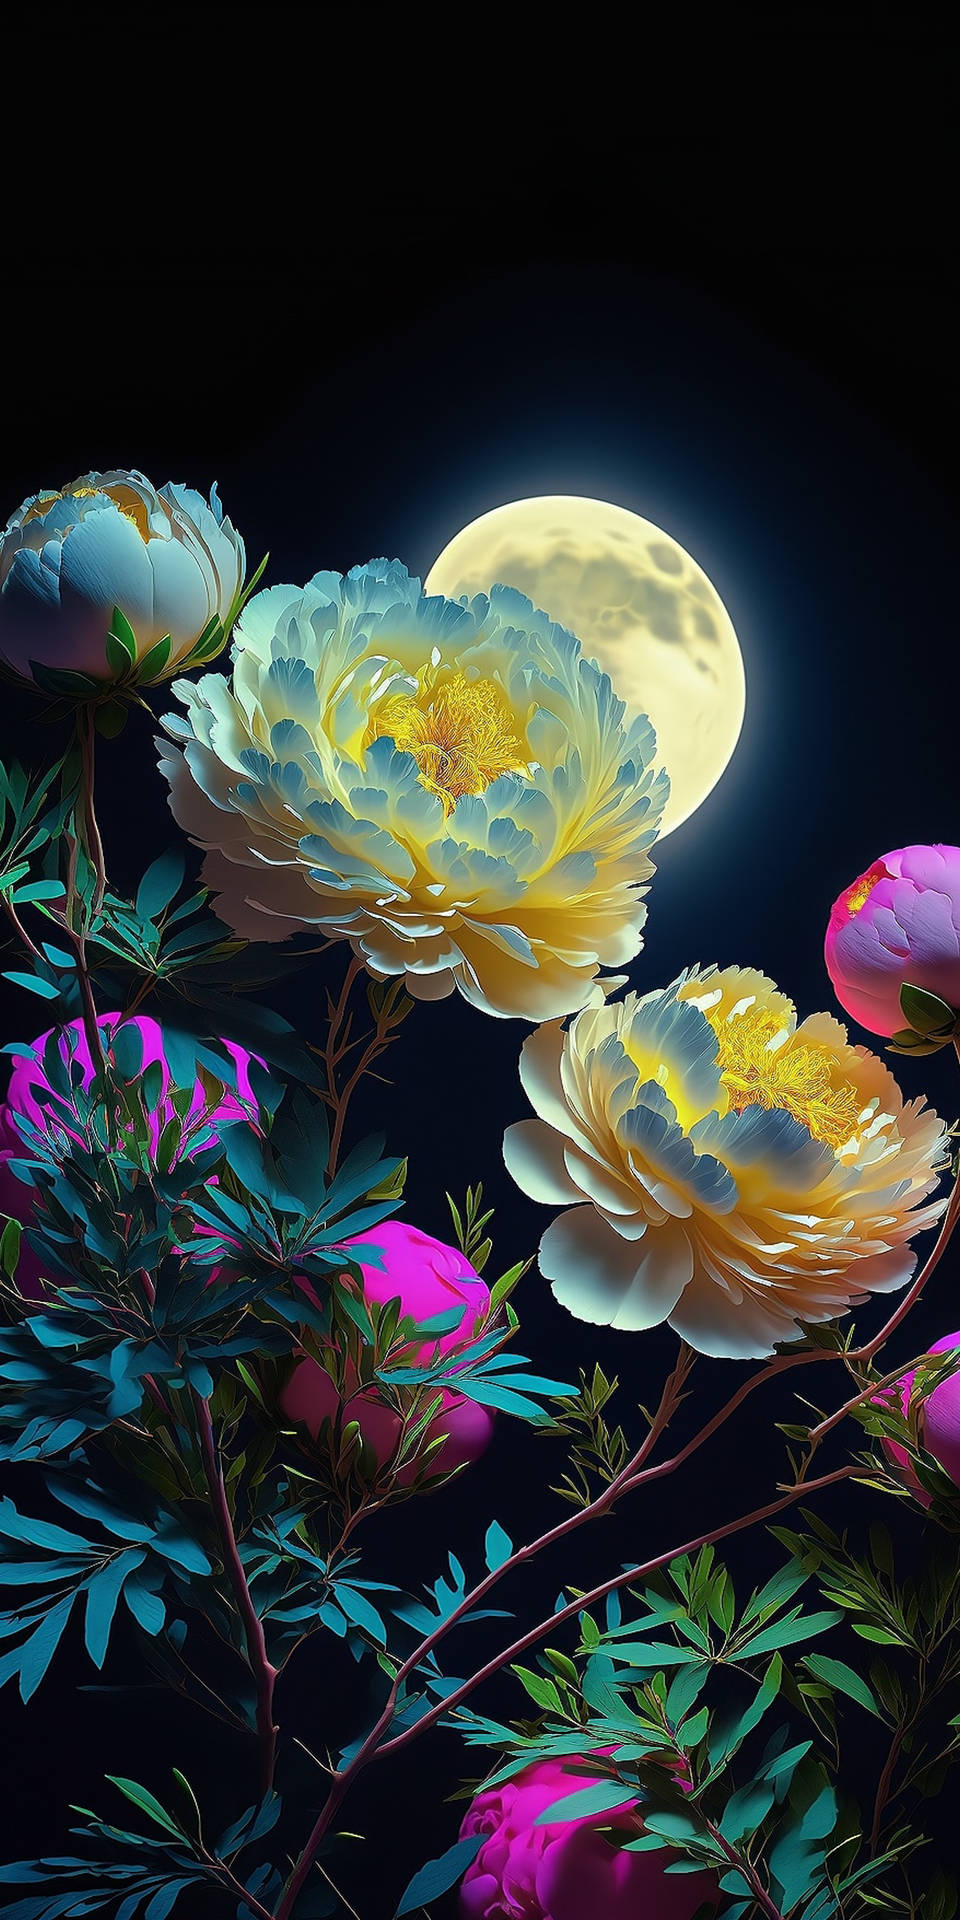 Share more than 141 night flower wallpaper latest